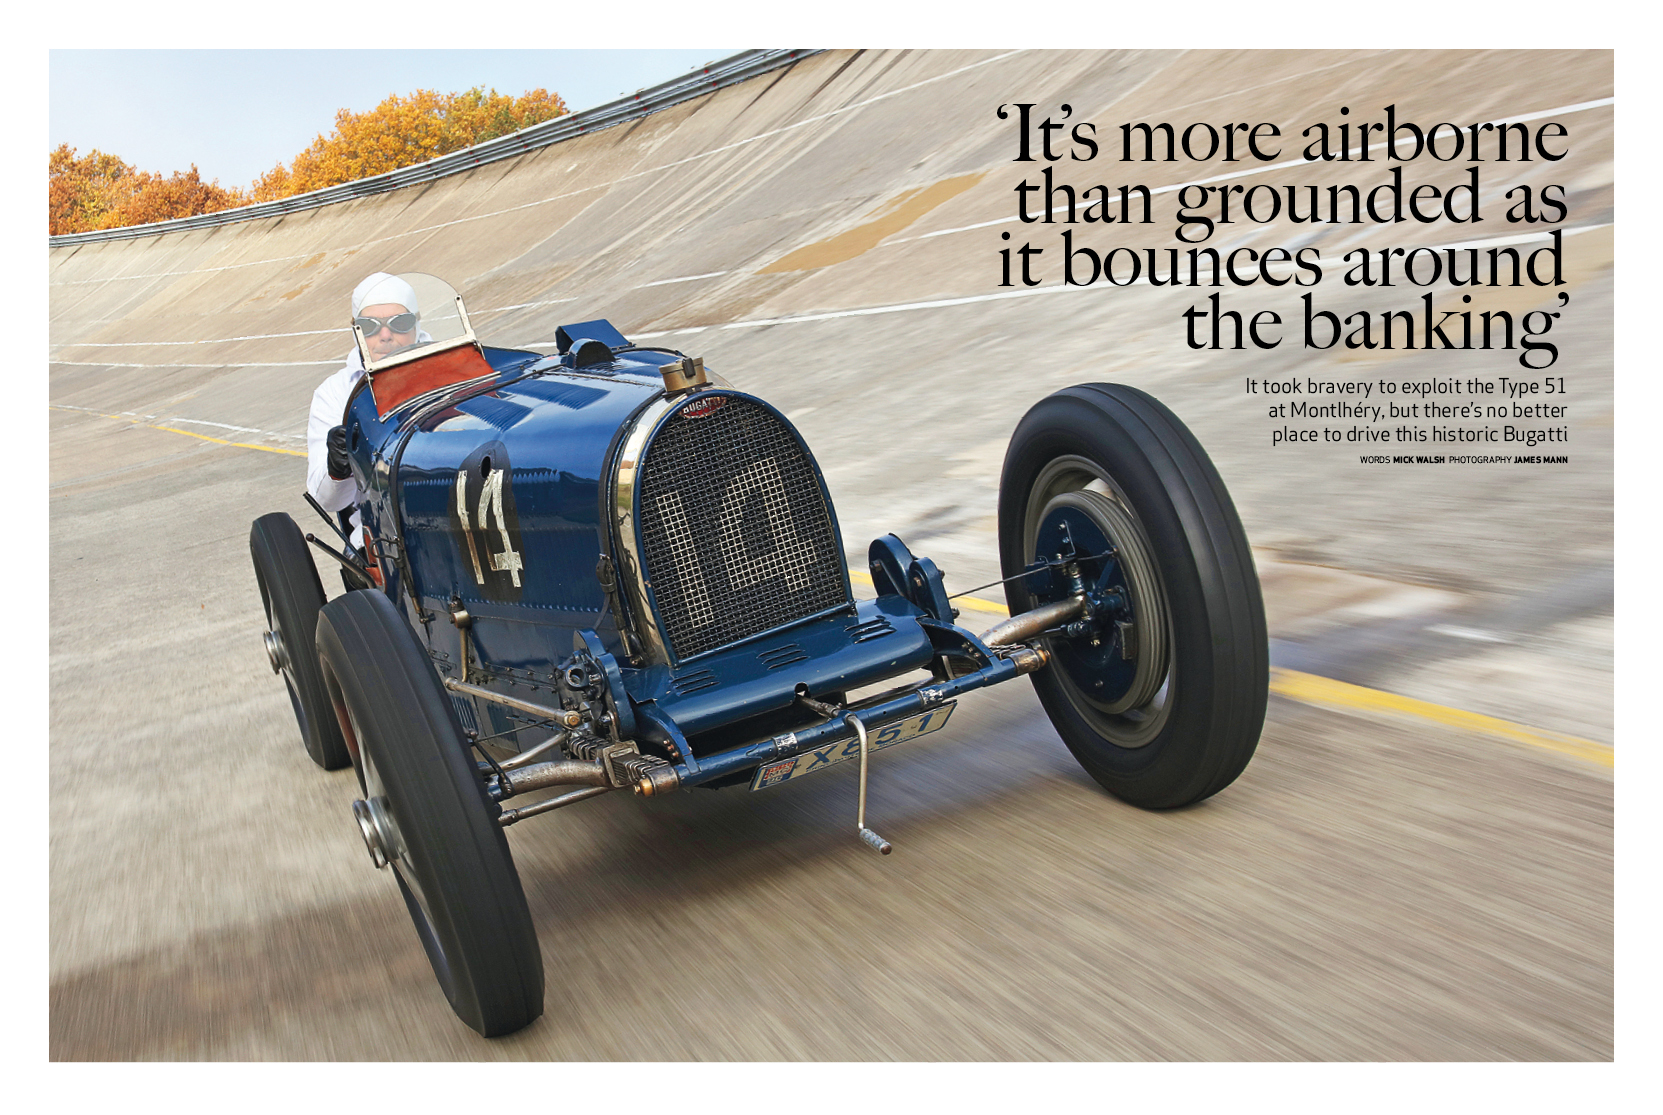 Classic & Sports Car – Bugatti at 110: Inside the February 2019 issue of C&SC